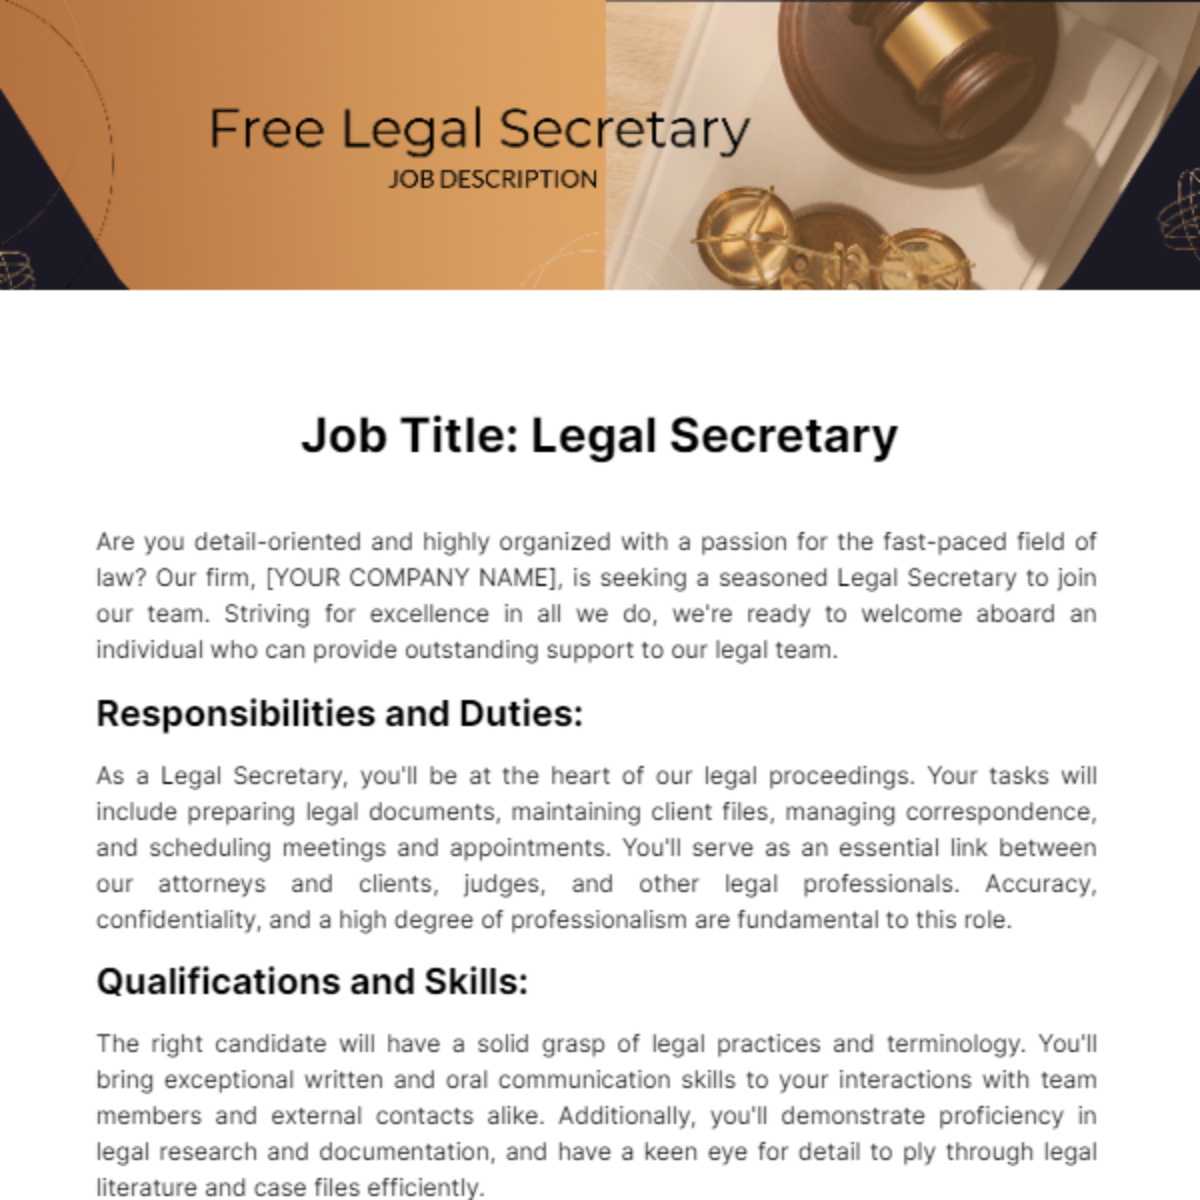 Free Legal Secretary Job Description Template